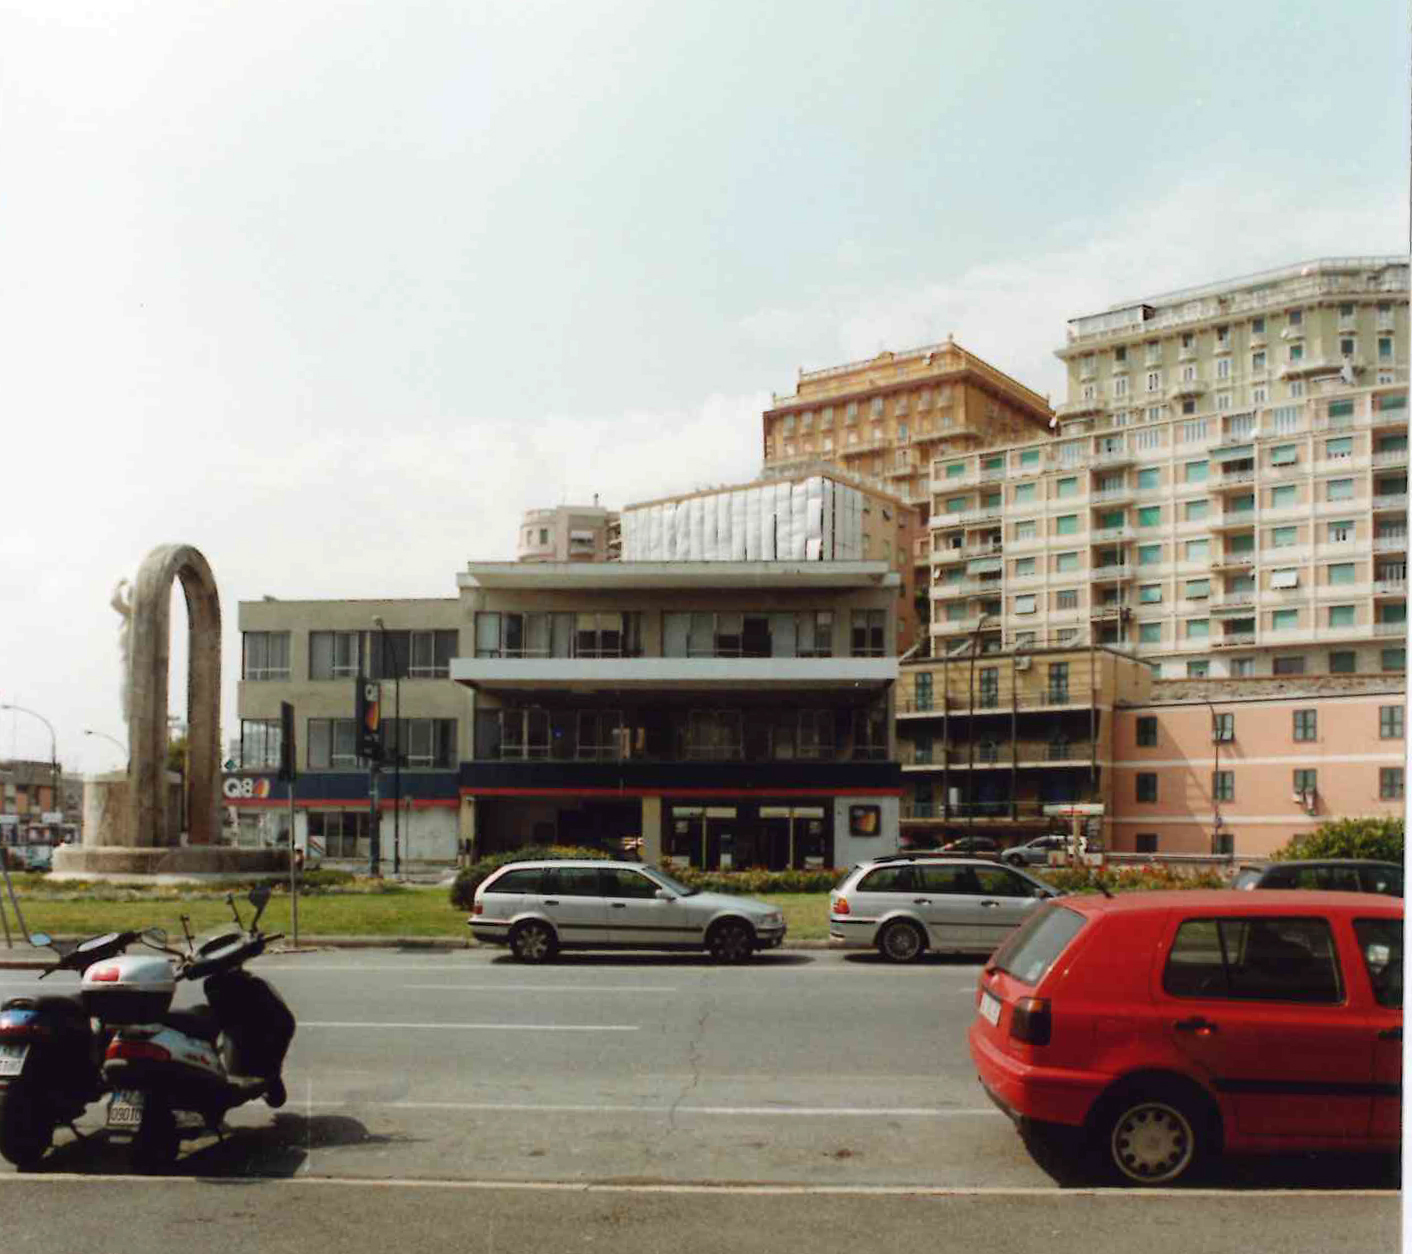 Ristorante San Pietro (ristorante) - Genova (GE)  (XX)